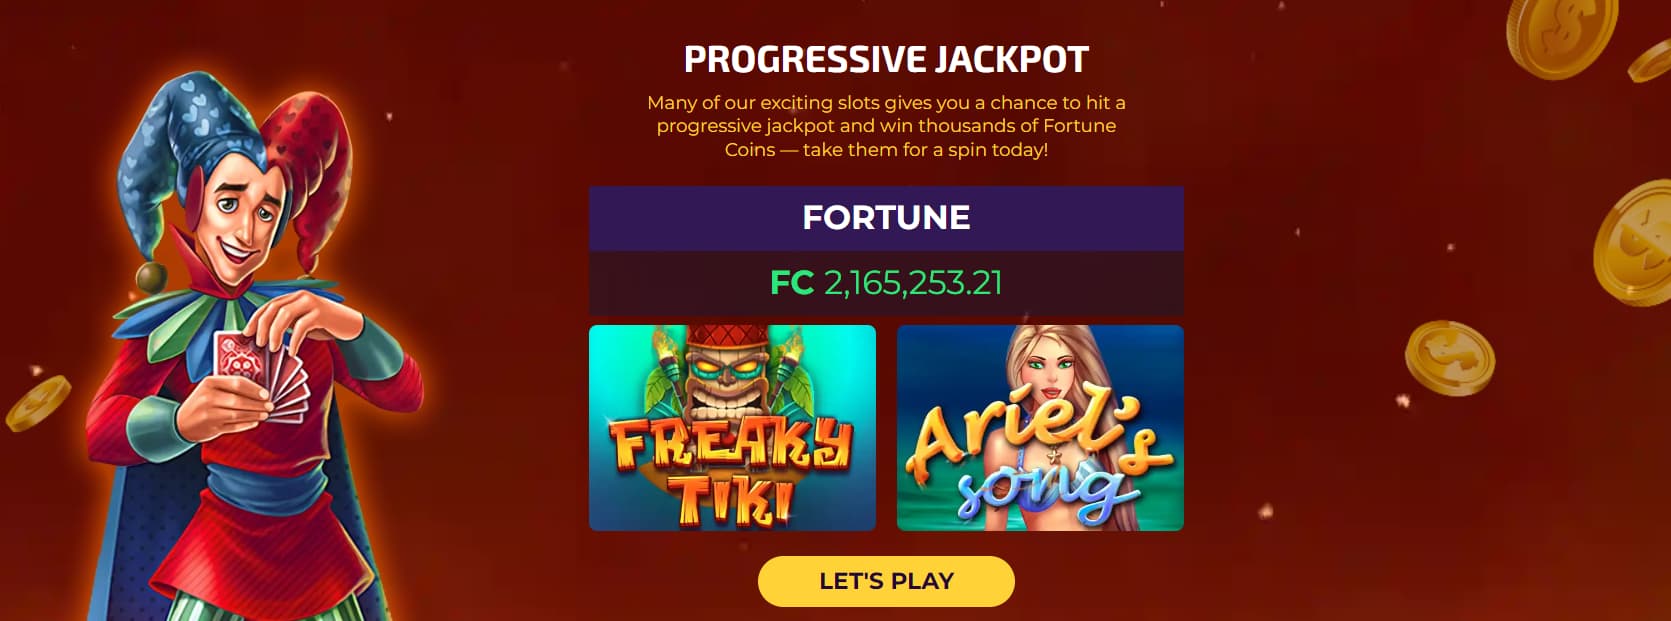 fortune coins progressive jackpot